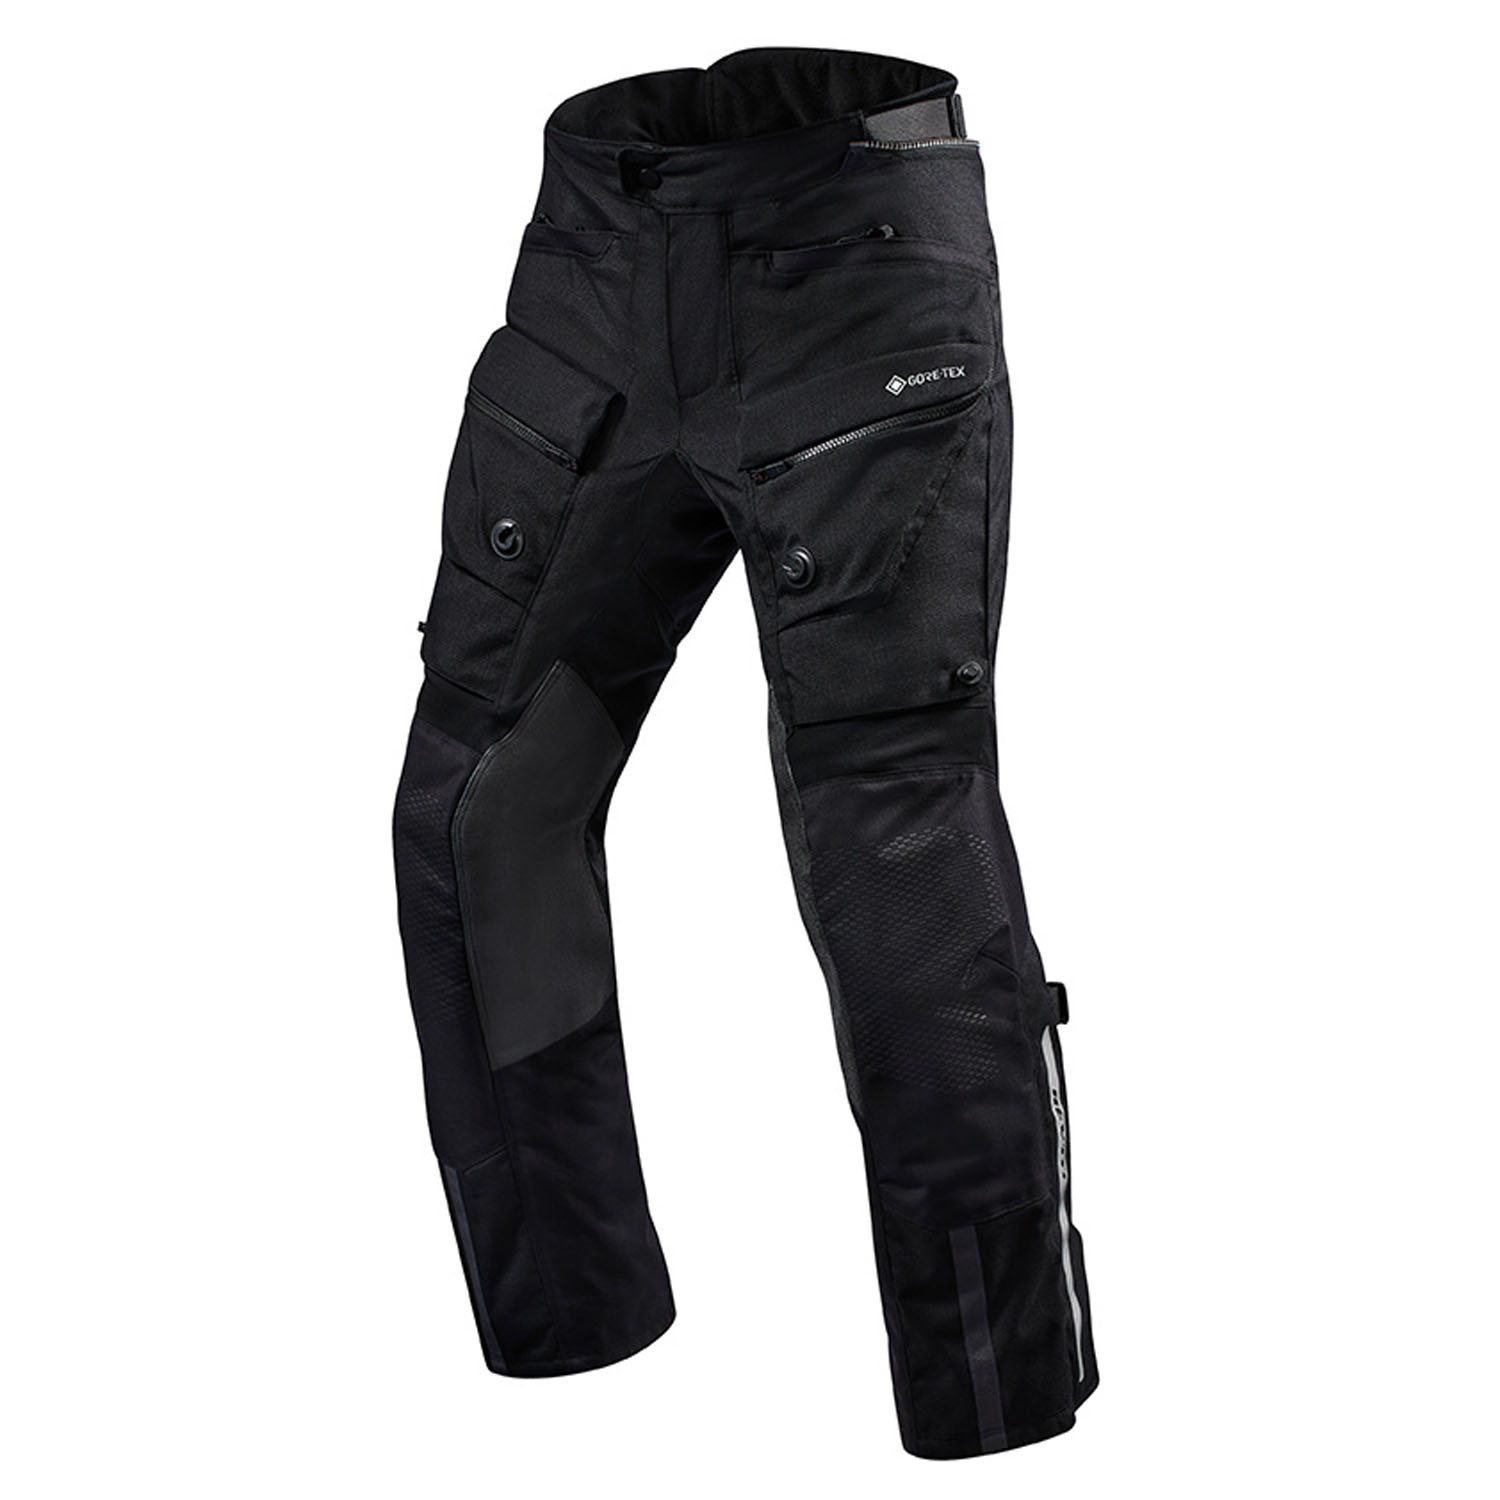 Image of REV'IT! Trousers Defender 3 GTX Black Long Motorcycle Pants Size XL EN